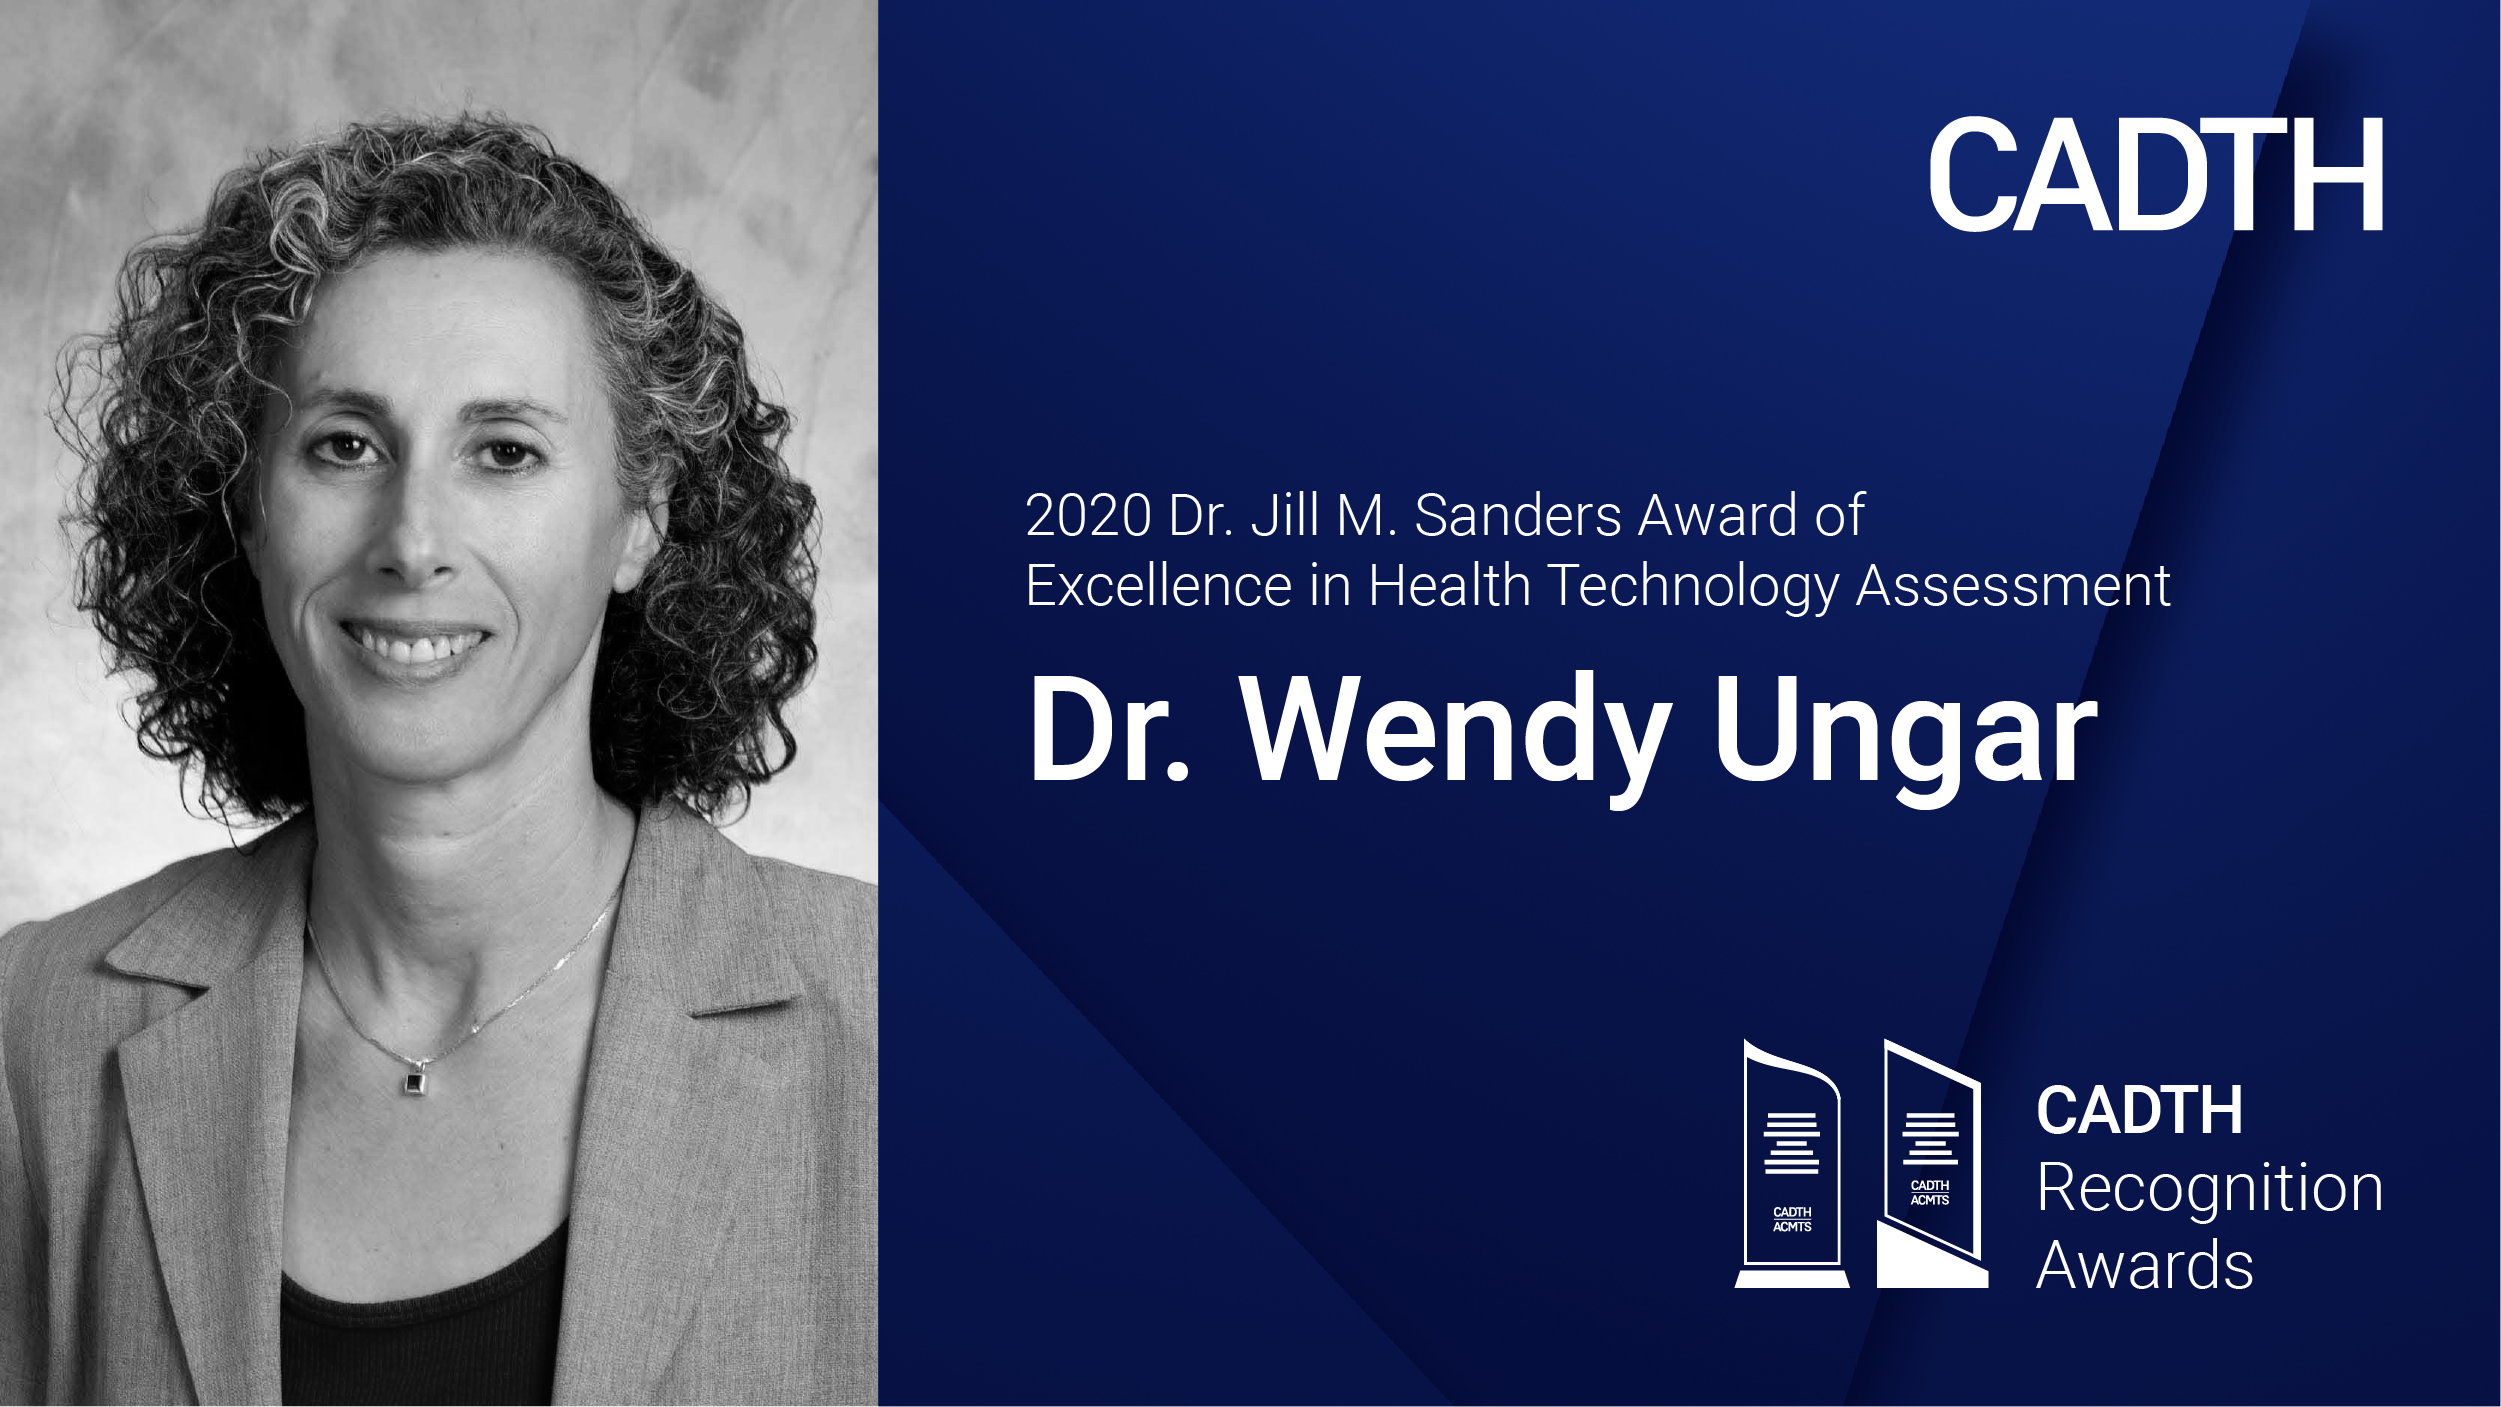 Dr. Jill M. Sanders Award of Excellence in Health Technology Assessment award winner for 2020 is Dr. Wendy Ungar